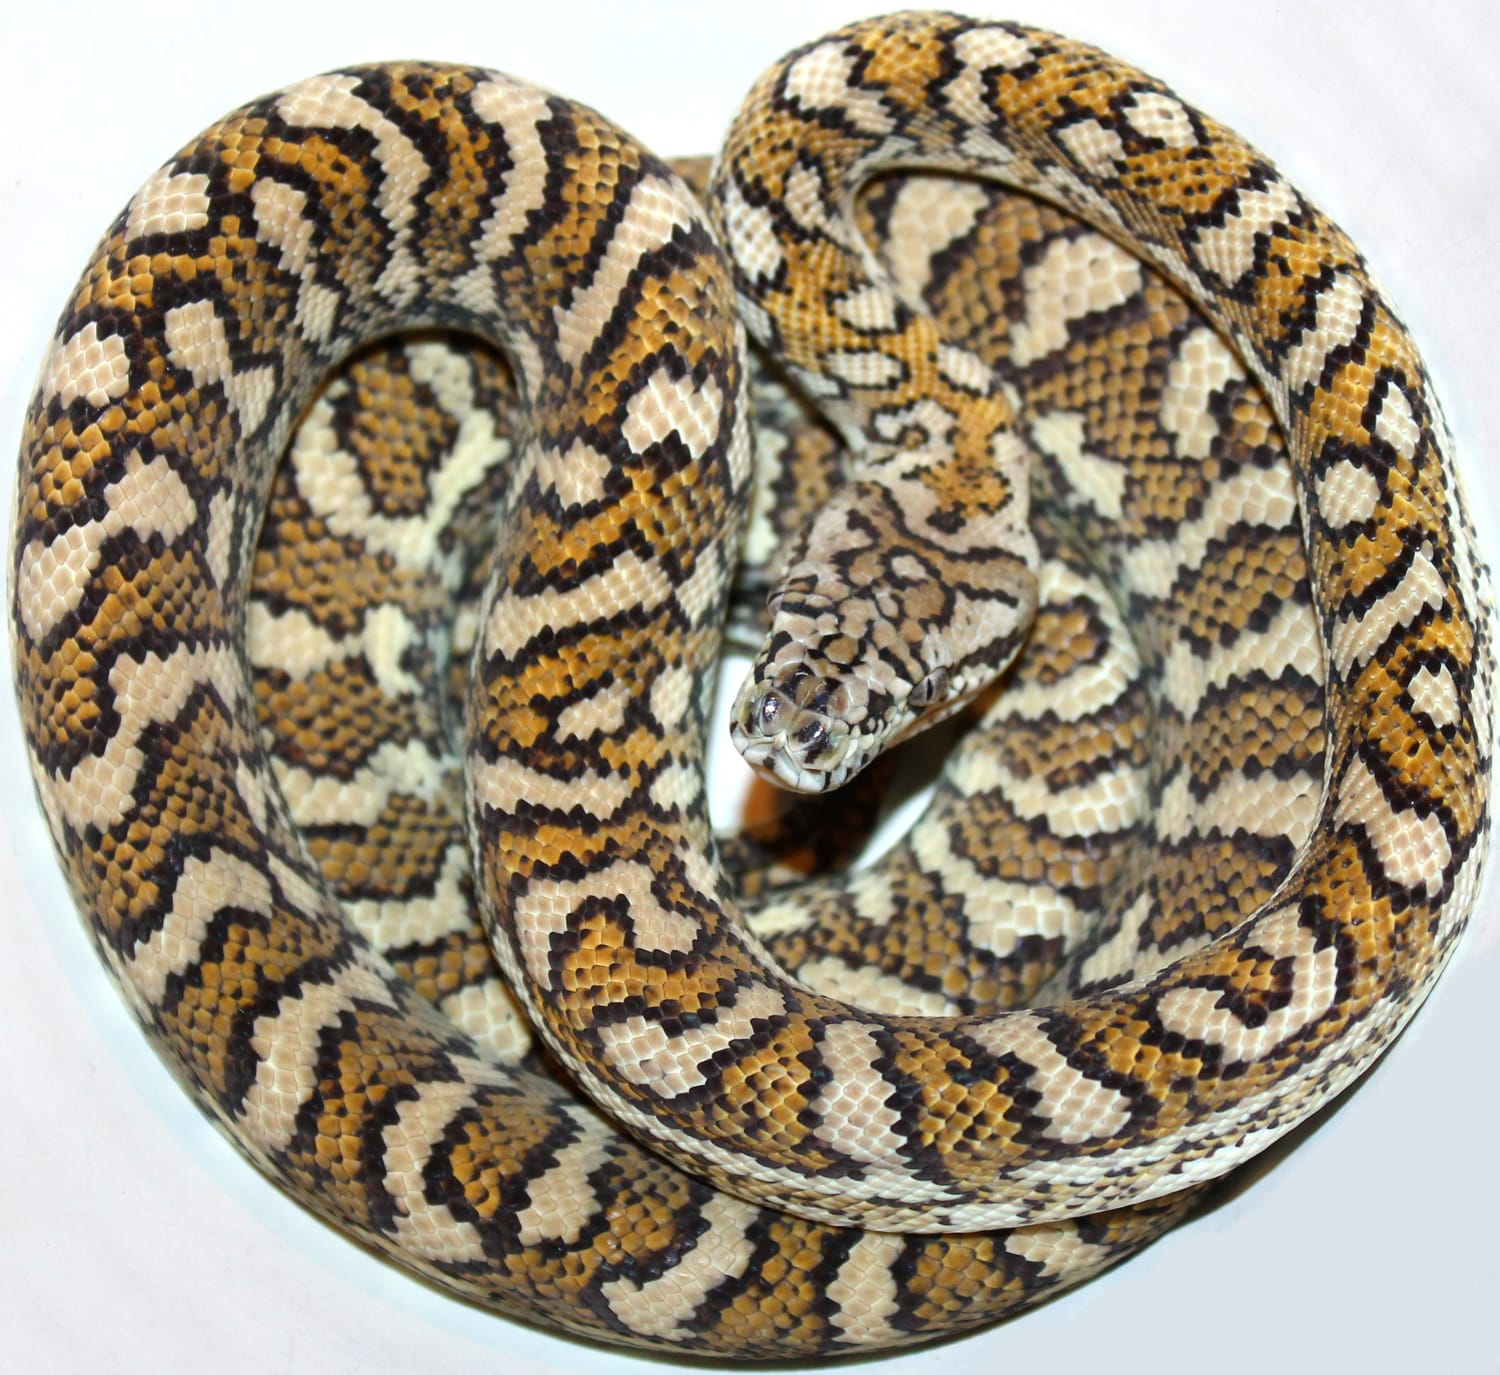 True Hypo Female Coastal Carpet Python by Inland Reptile